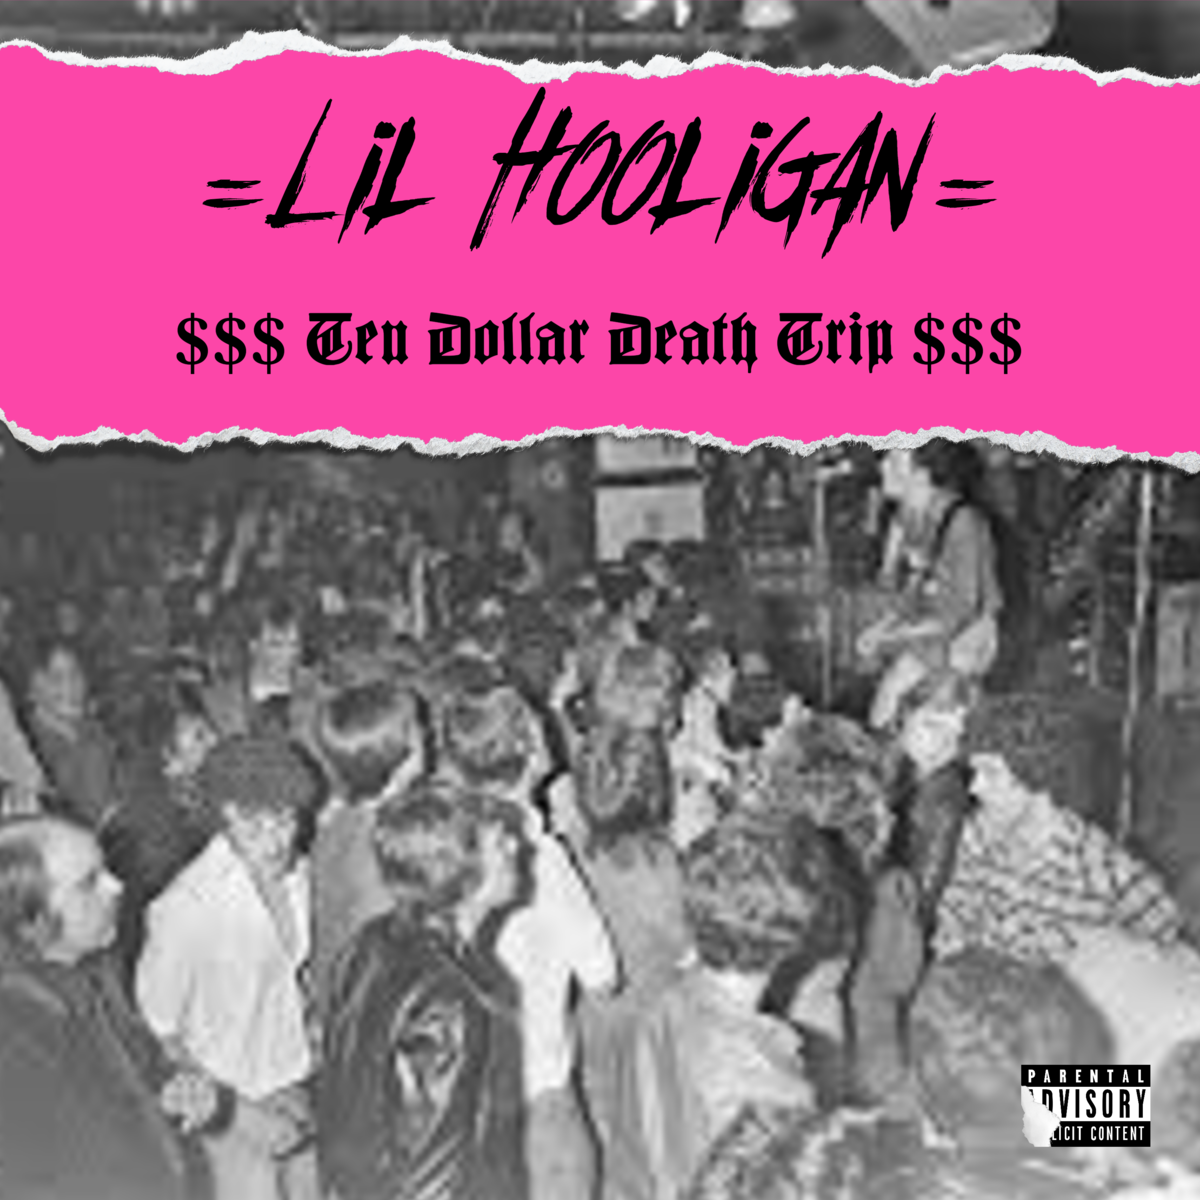 $$$ Ten Dollar Death Trip $$$ - Lil Hooligan. Coming Soon